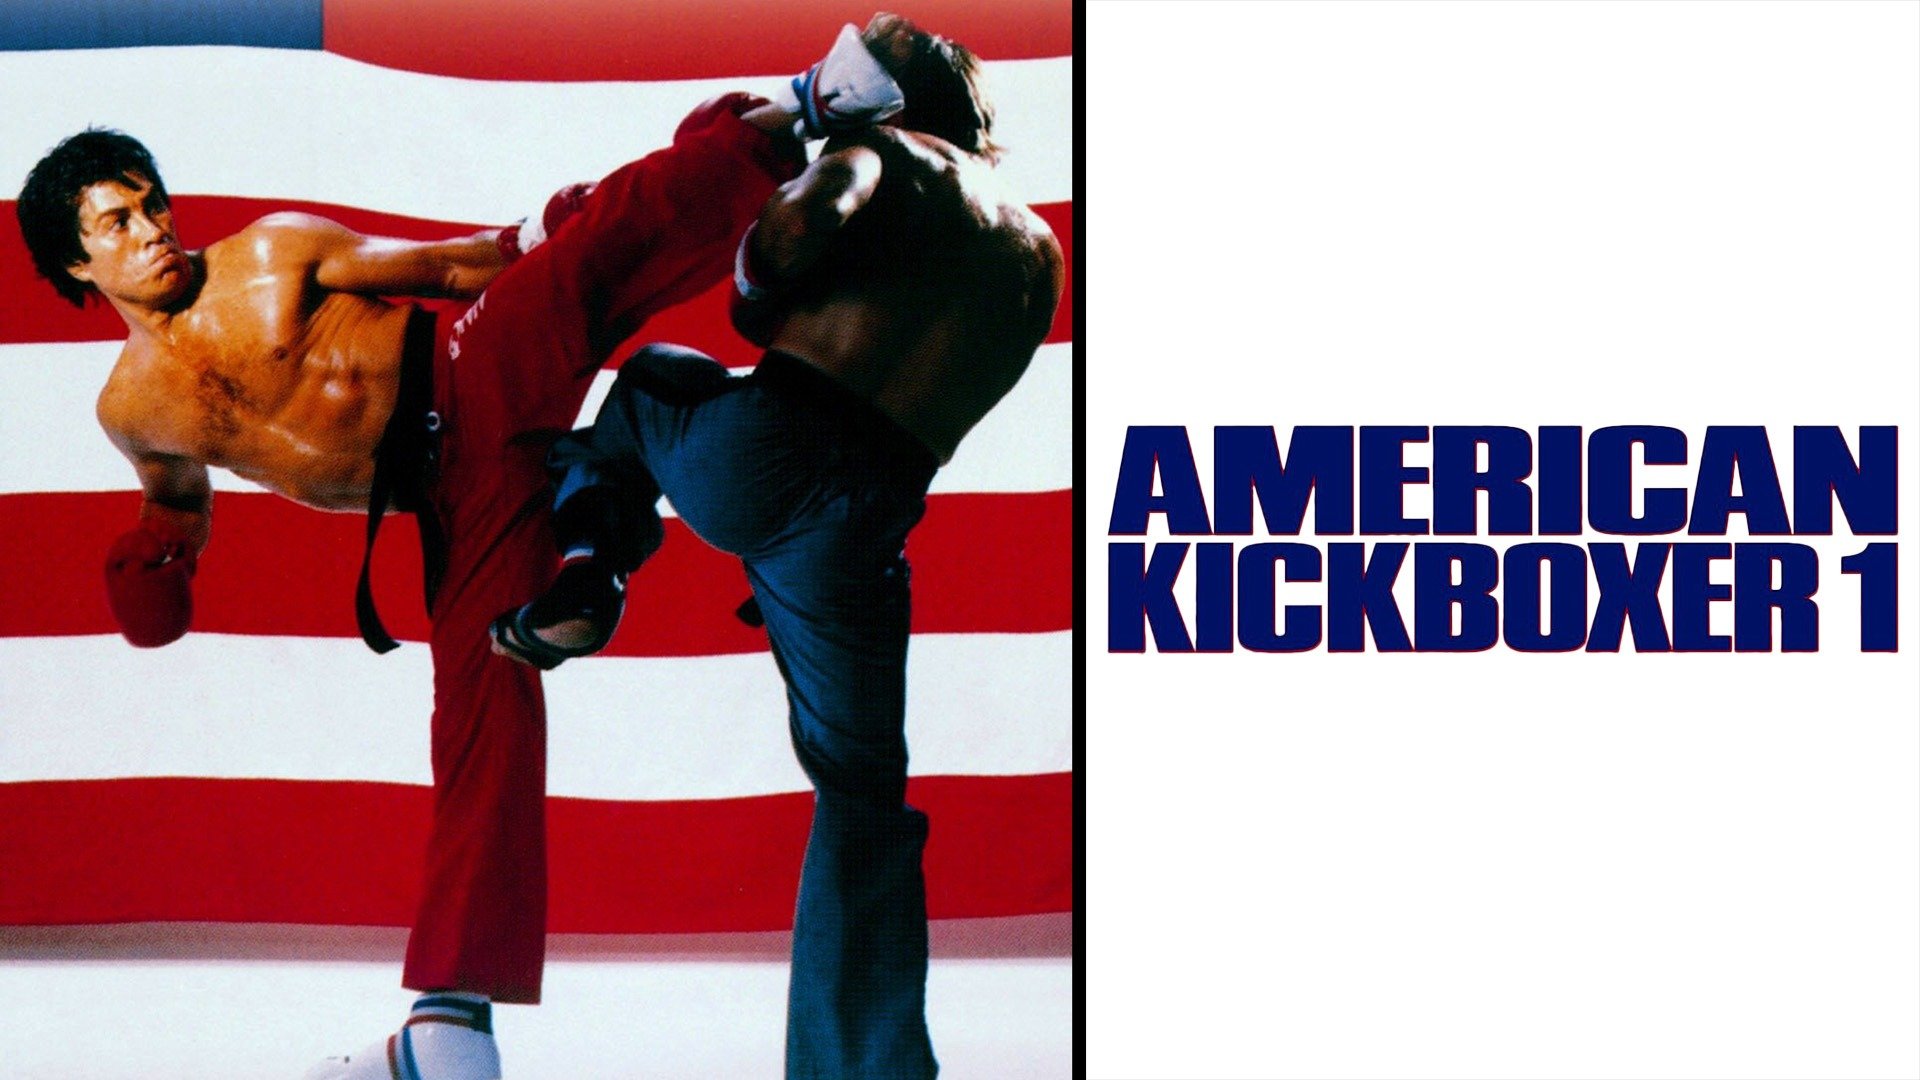 American Kickboxer 1 photo pic